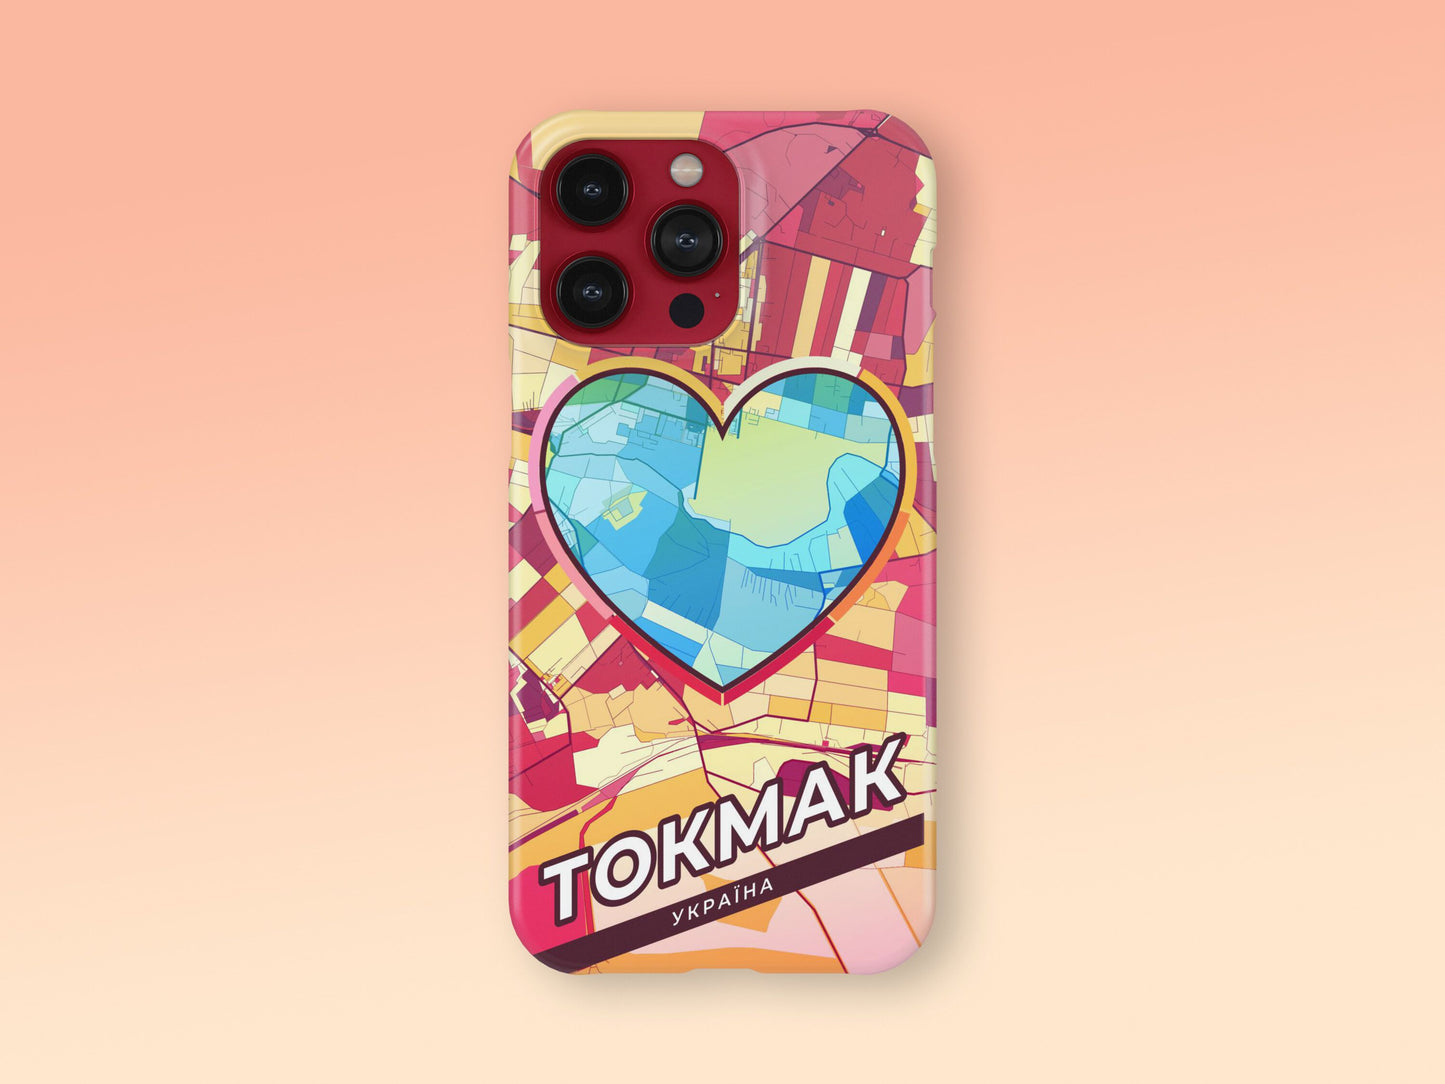 Tokmak Ukraine slim phone case with colorful icon 2